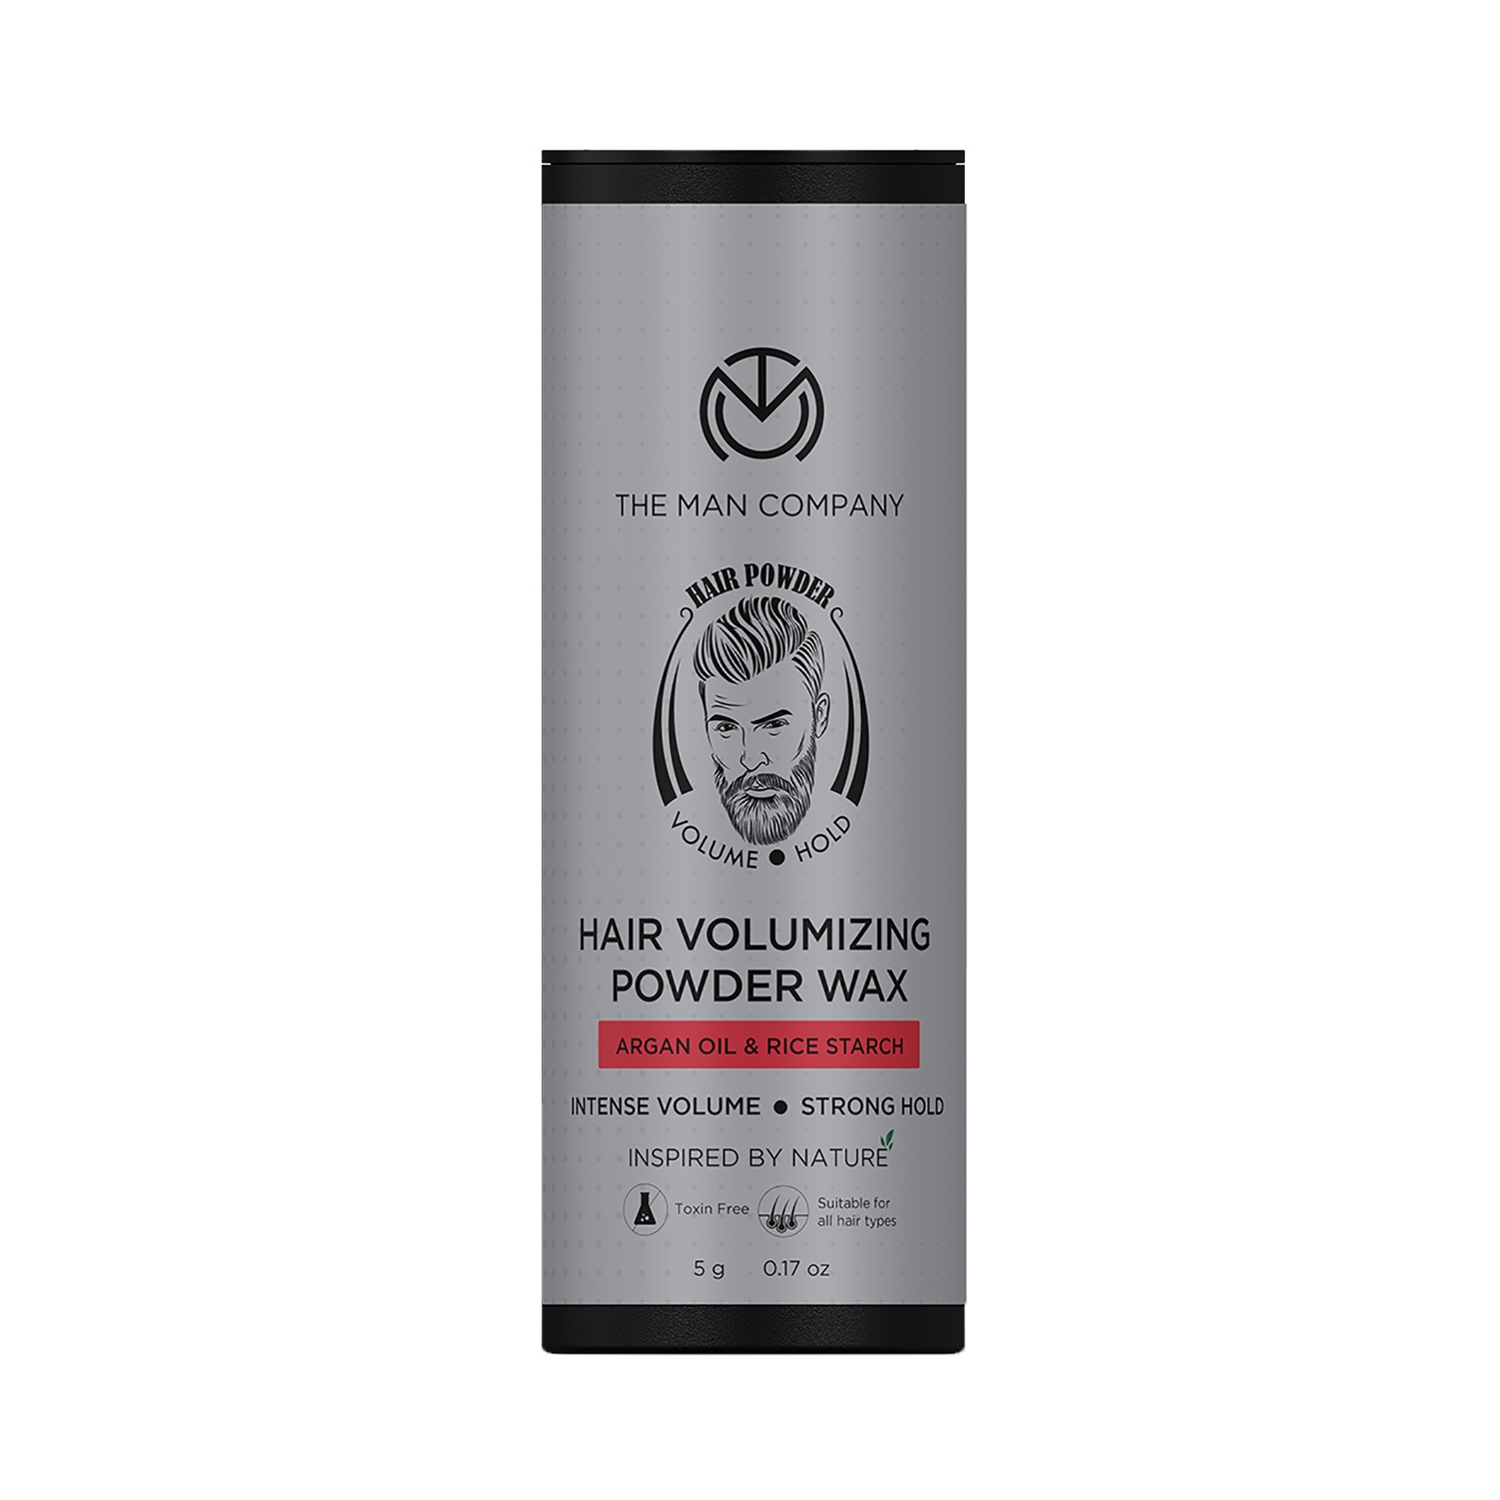 The Man Company Hair Volumizing Powder Wax (5g)